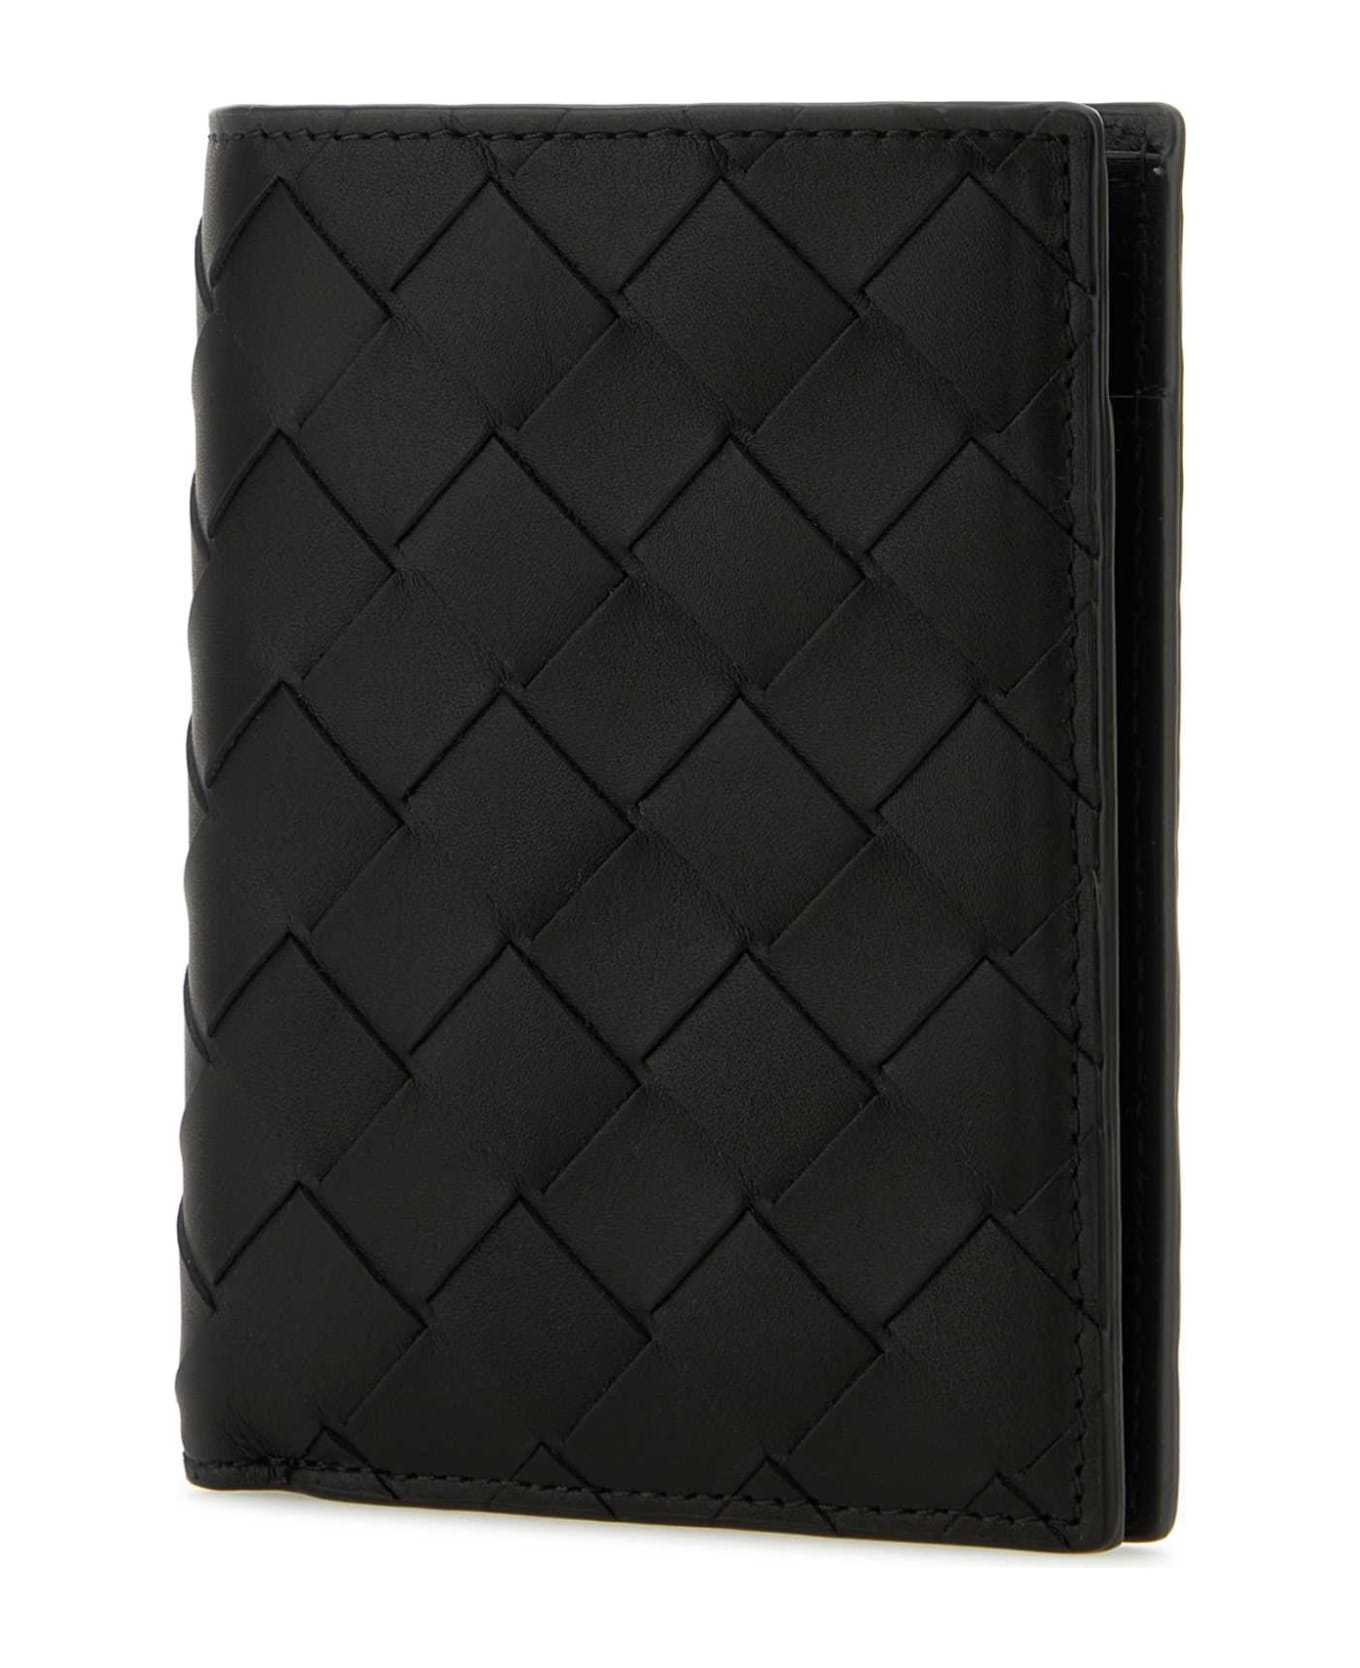 Bottega Veneta Black Leather Wallet - BLACKSILVER